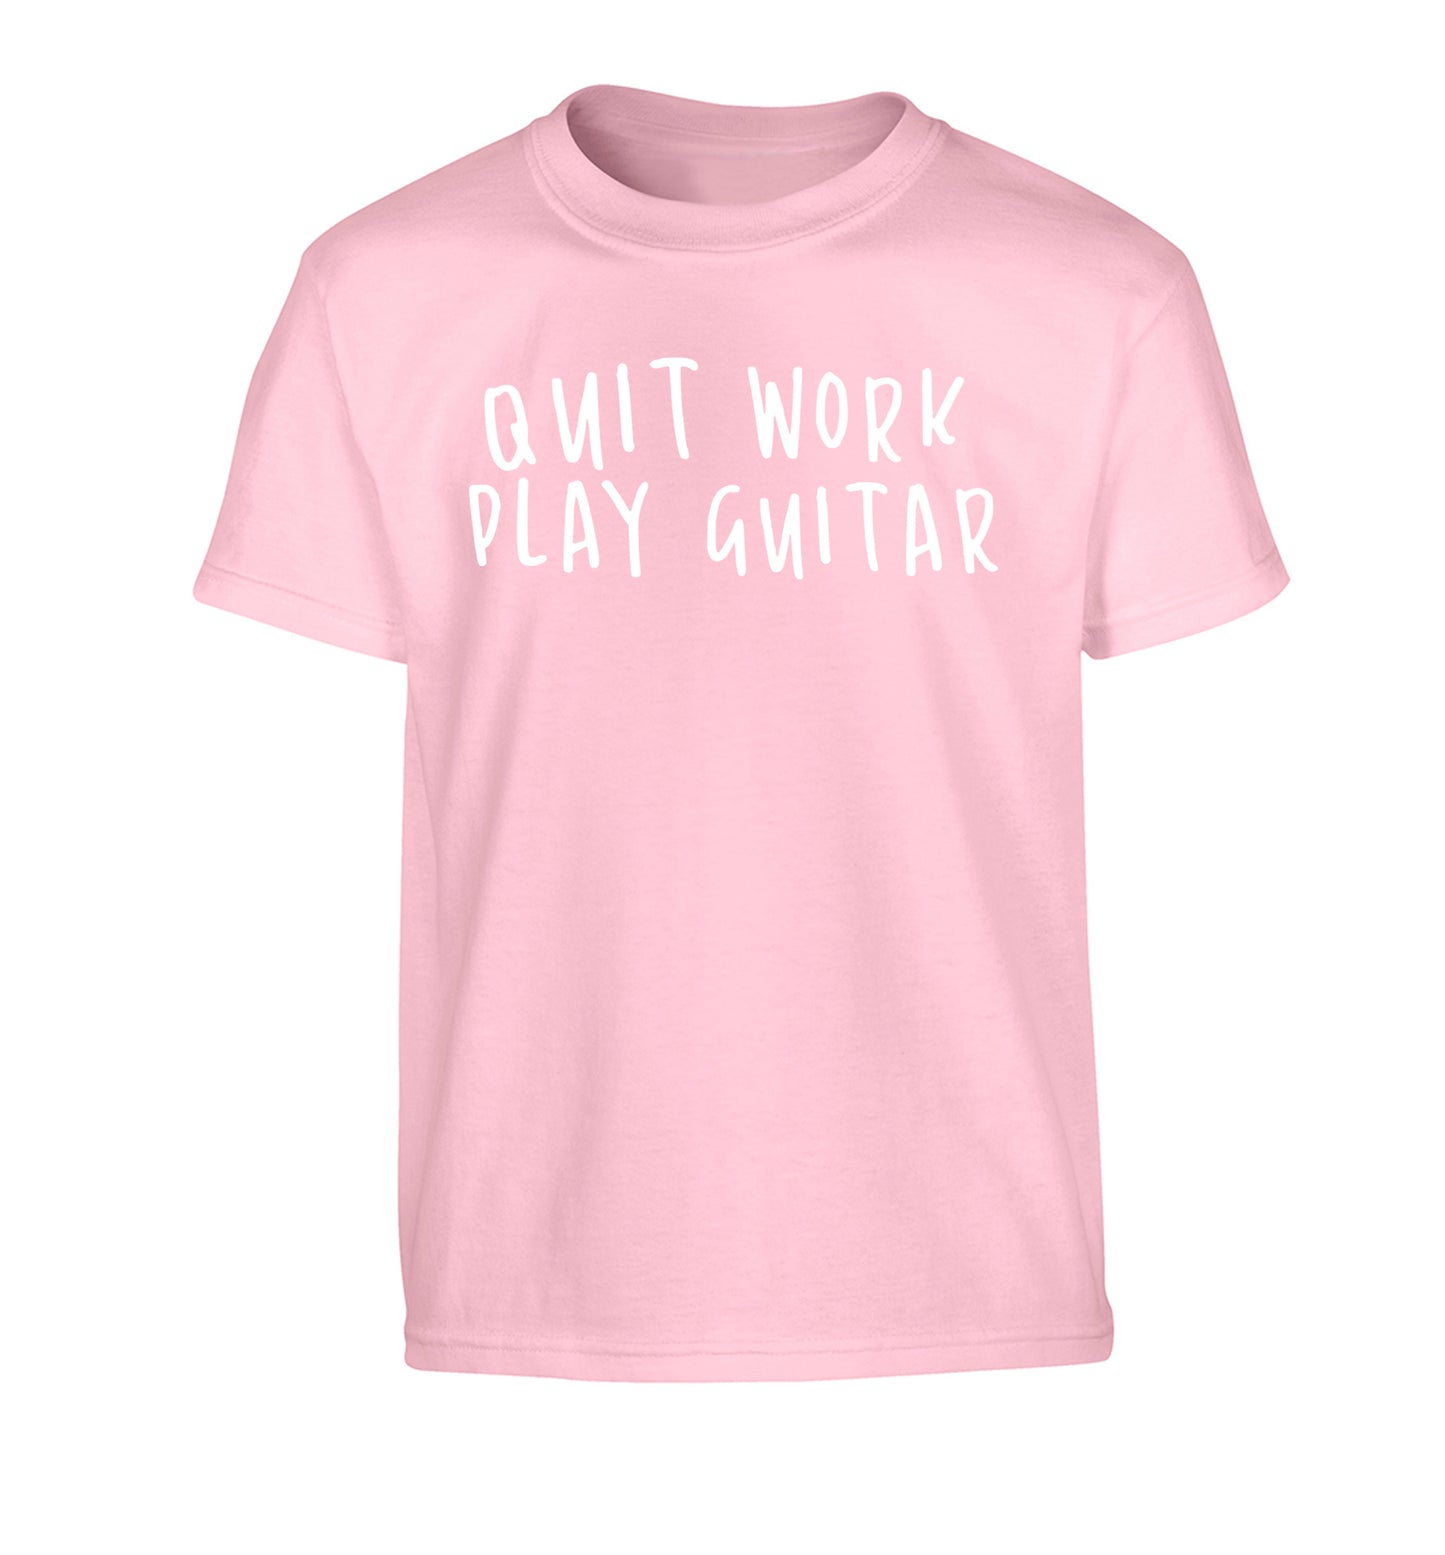 Quit work play guitar Children's light pink Tshirt 12-14 Years